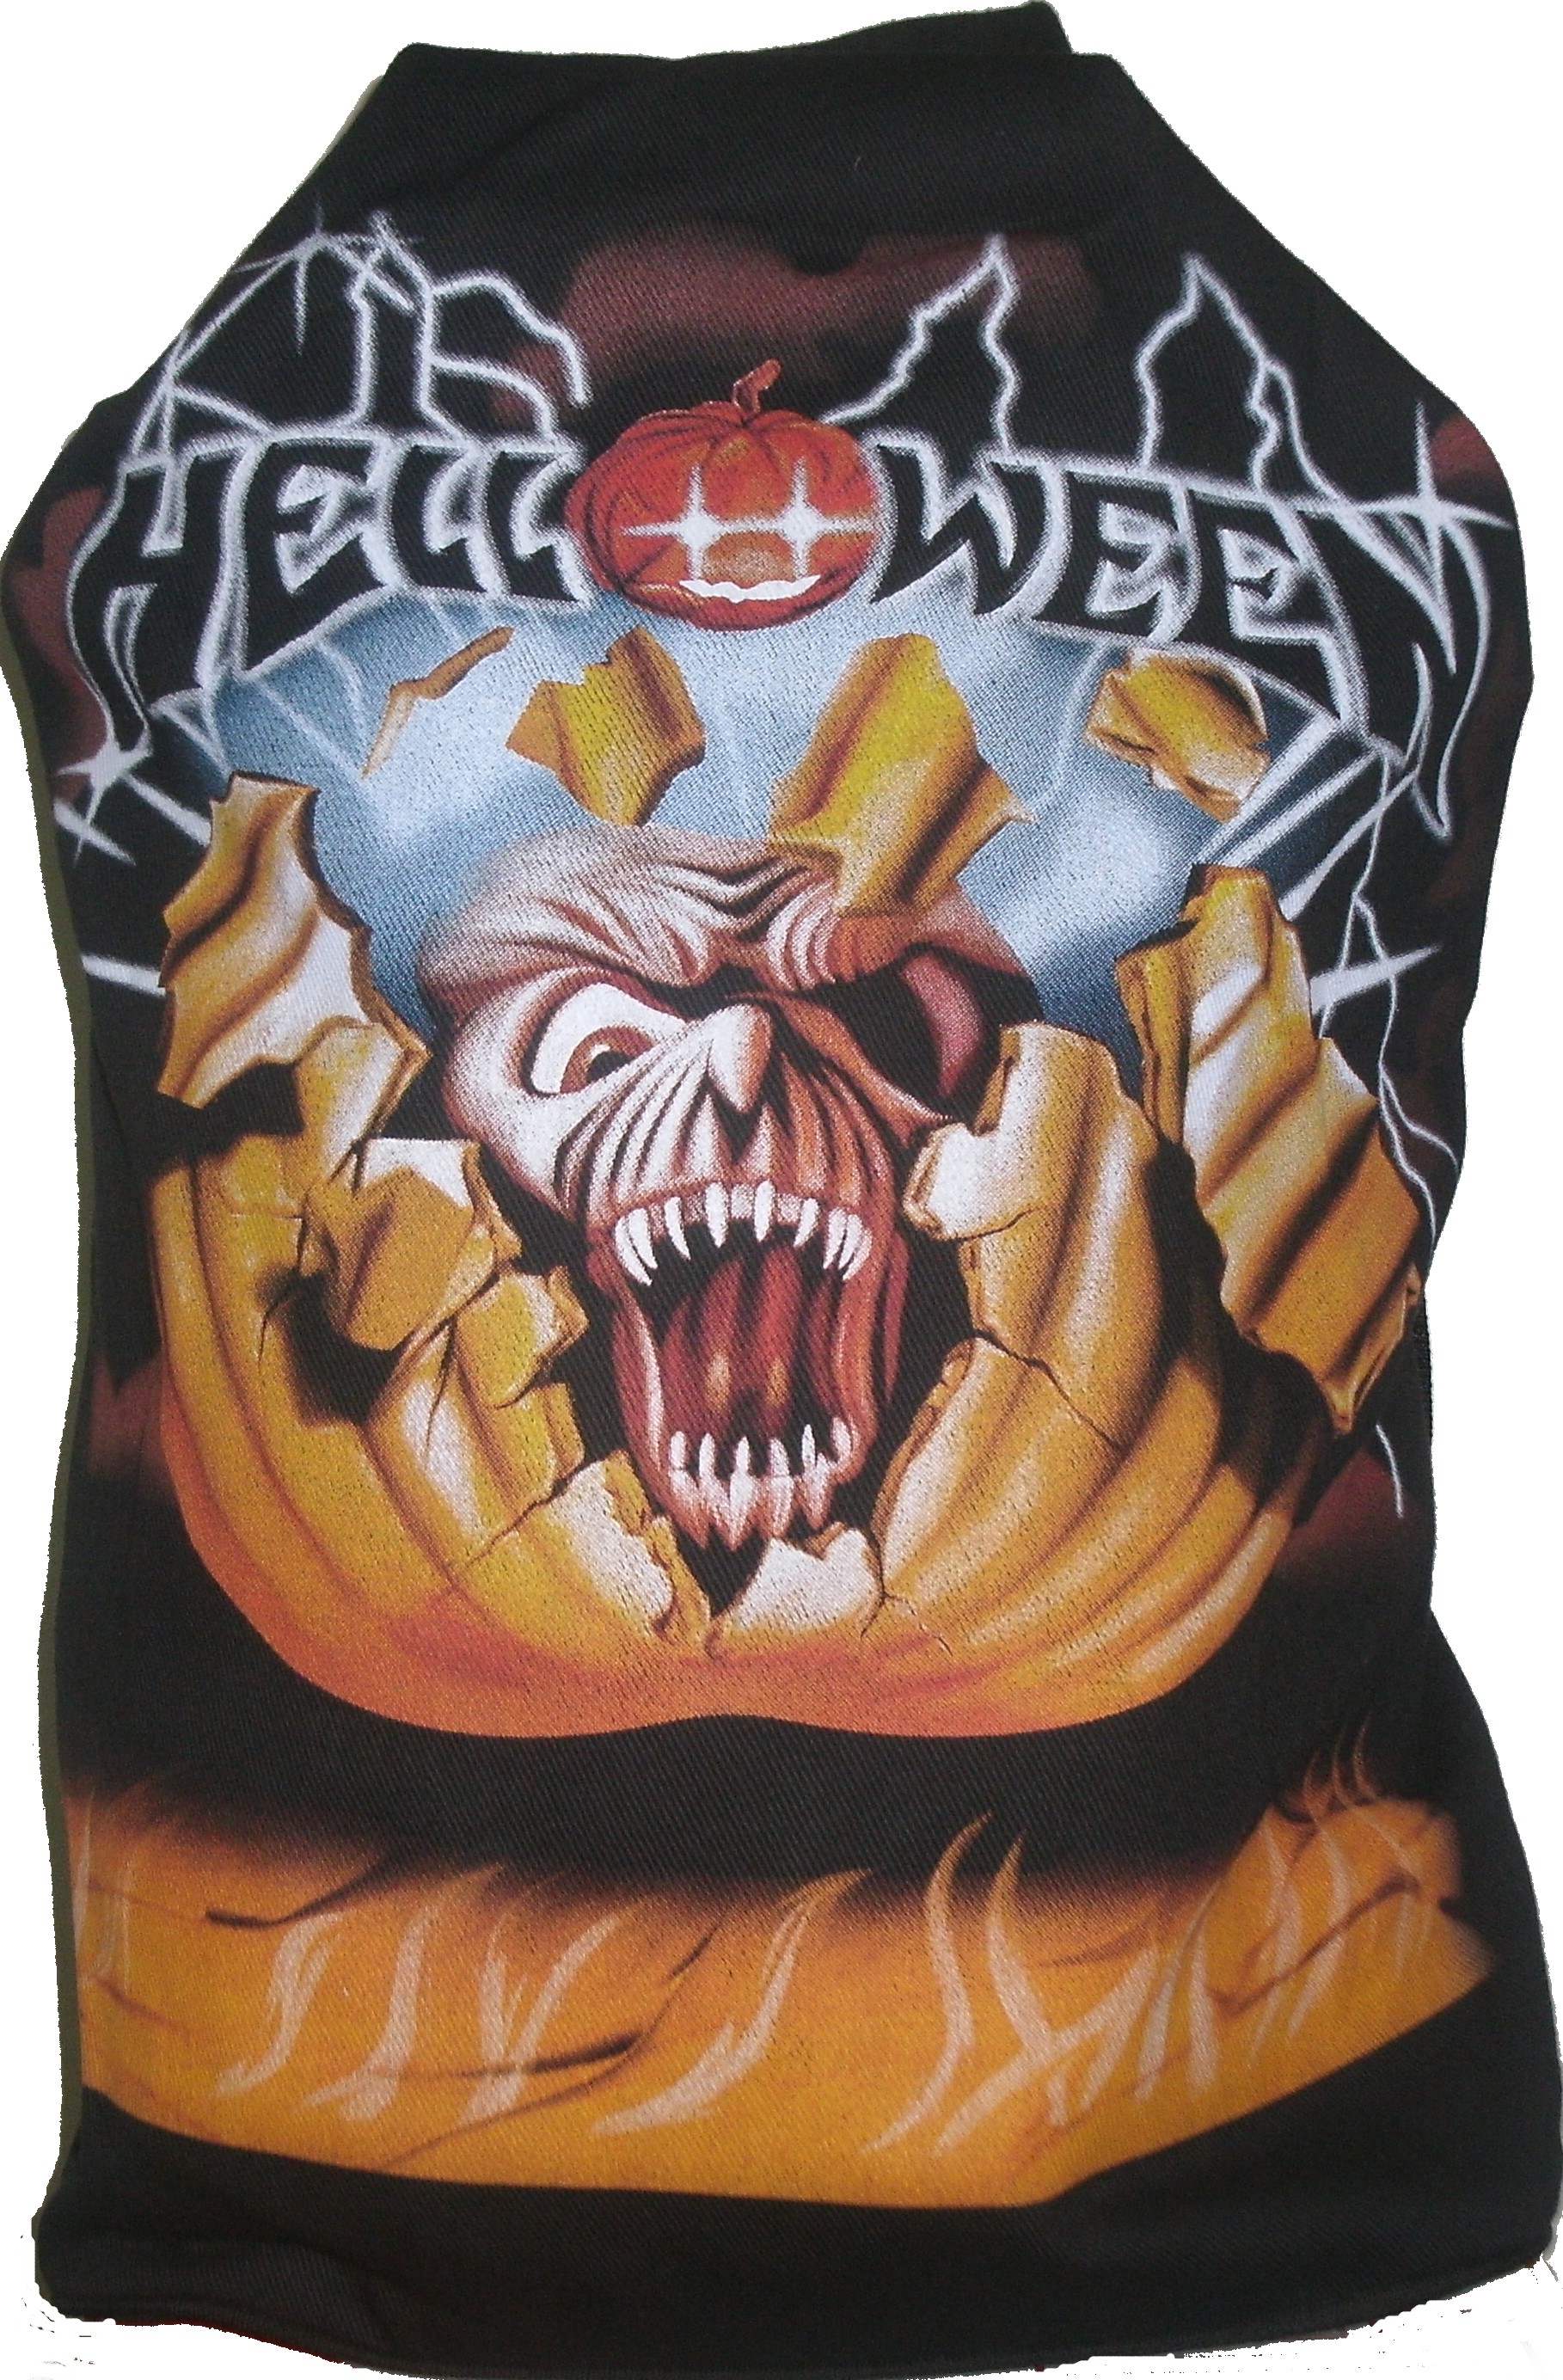 Helloween backpack – RoxxBKK